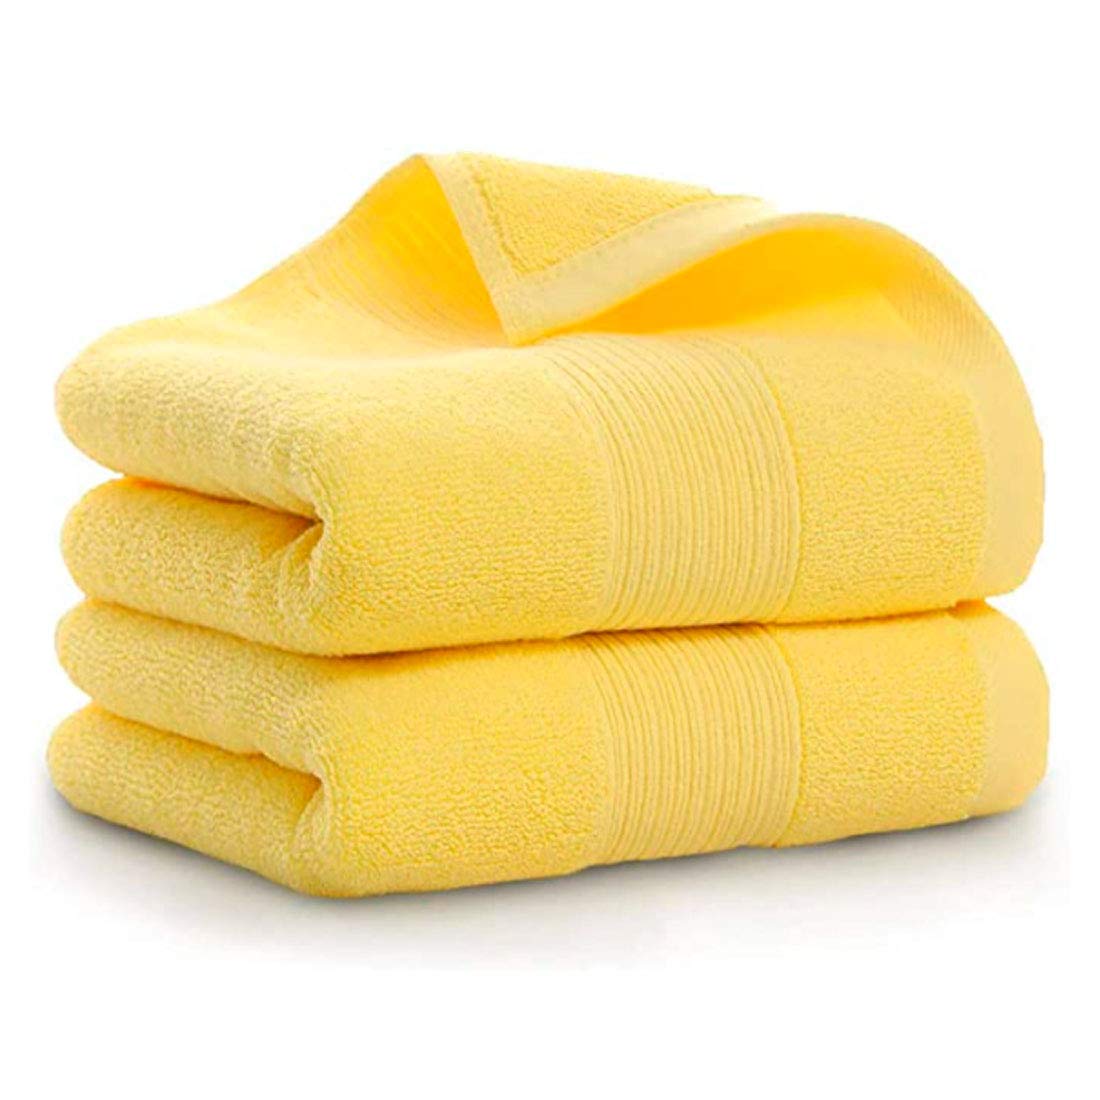 100% Cotton Hand Towels 2 Pack , Salon Thick Bath Hand Towel,Gym Towel 14  x 30